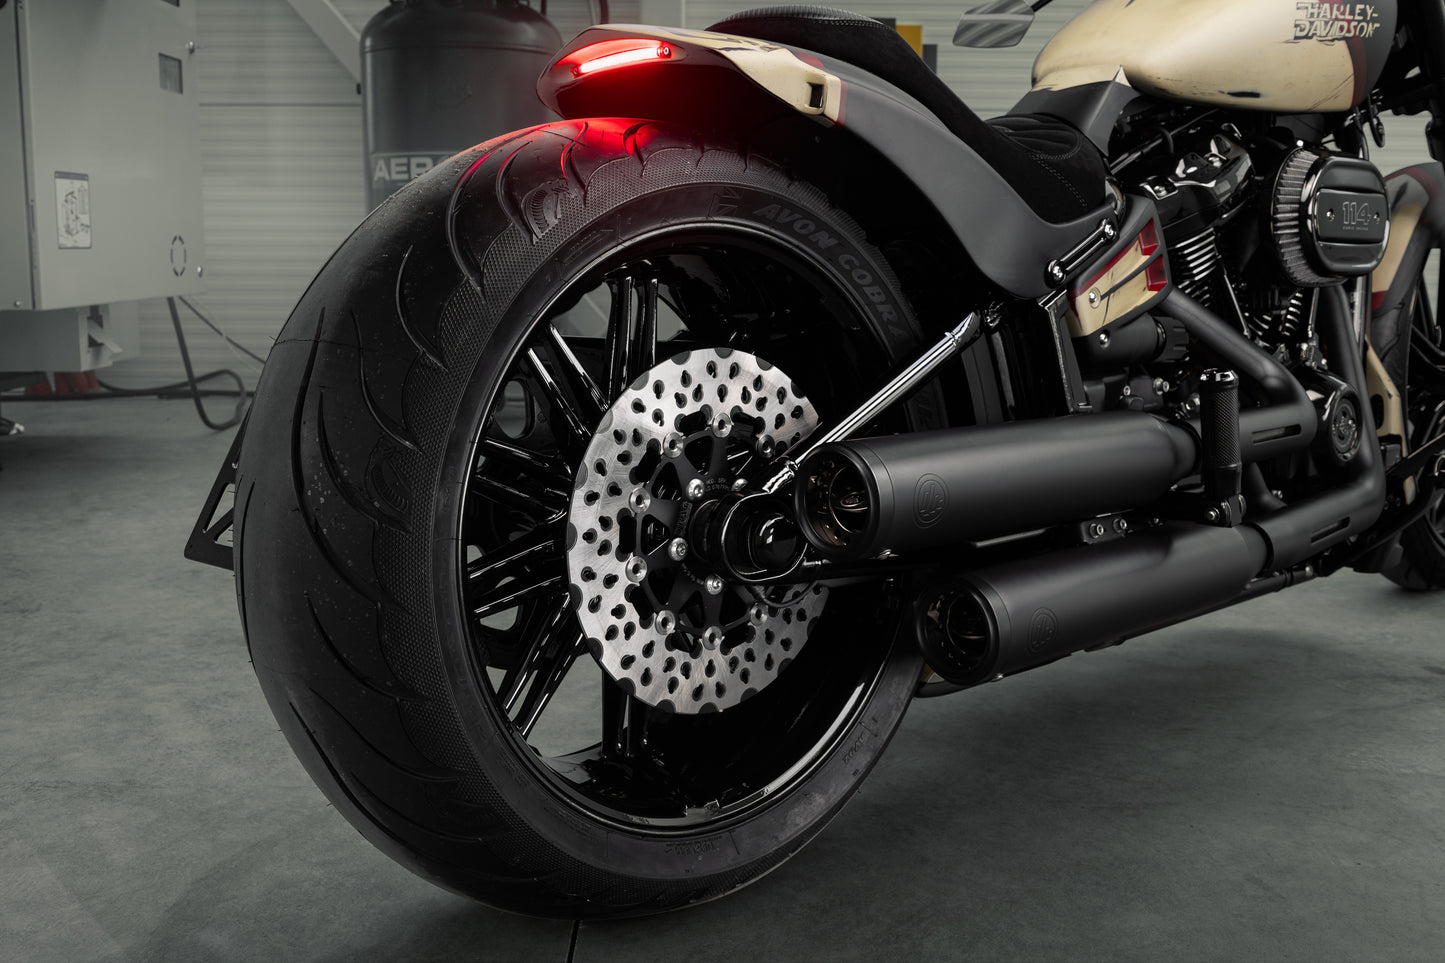 Zoomed Harley Davidson motorcycle with Killer Custom "Avenger" rear fender kit from the rear in a modern bike shop